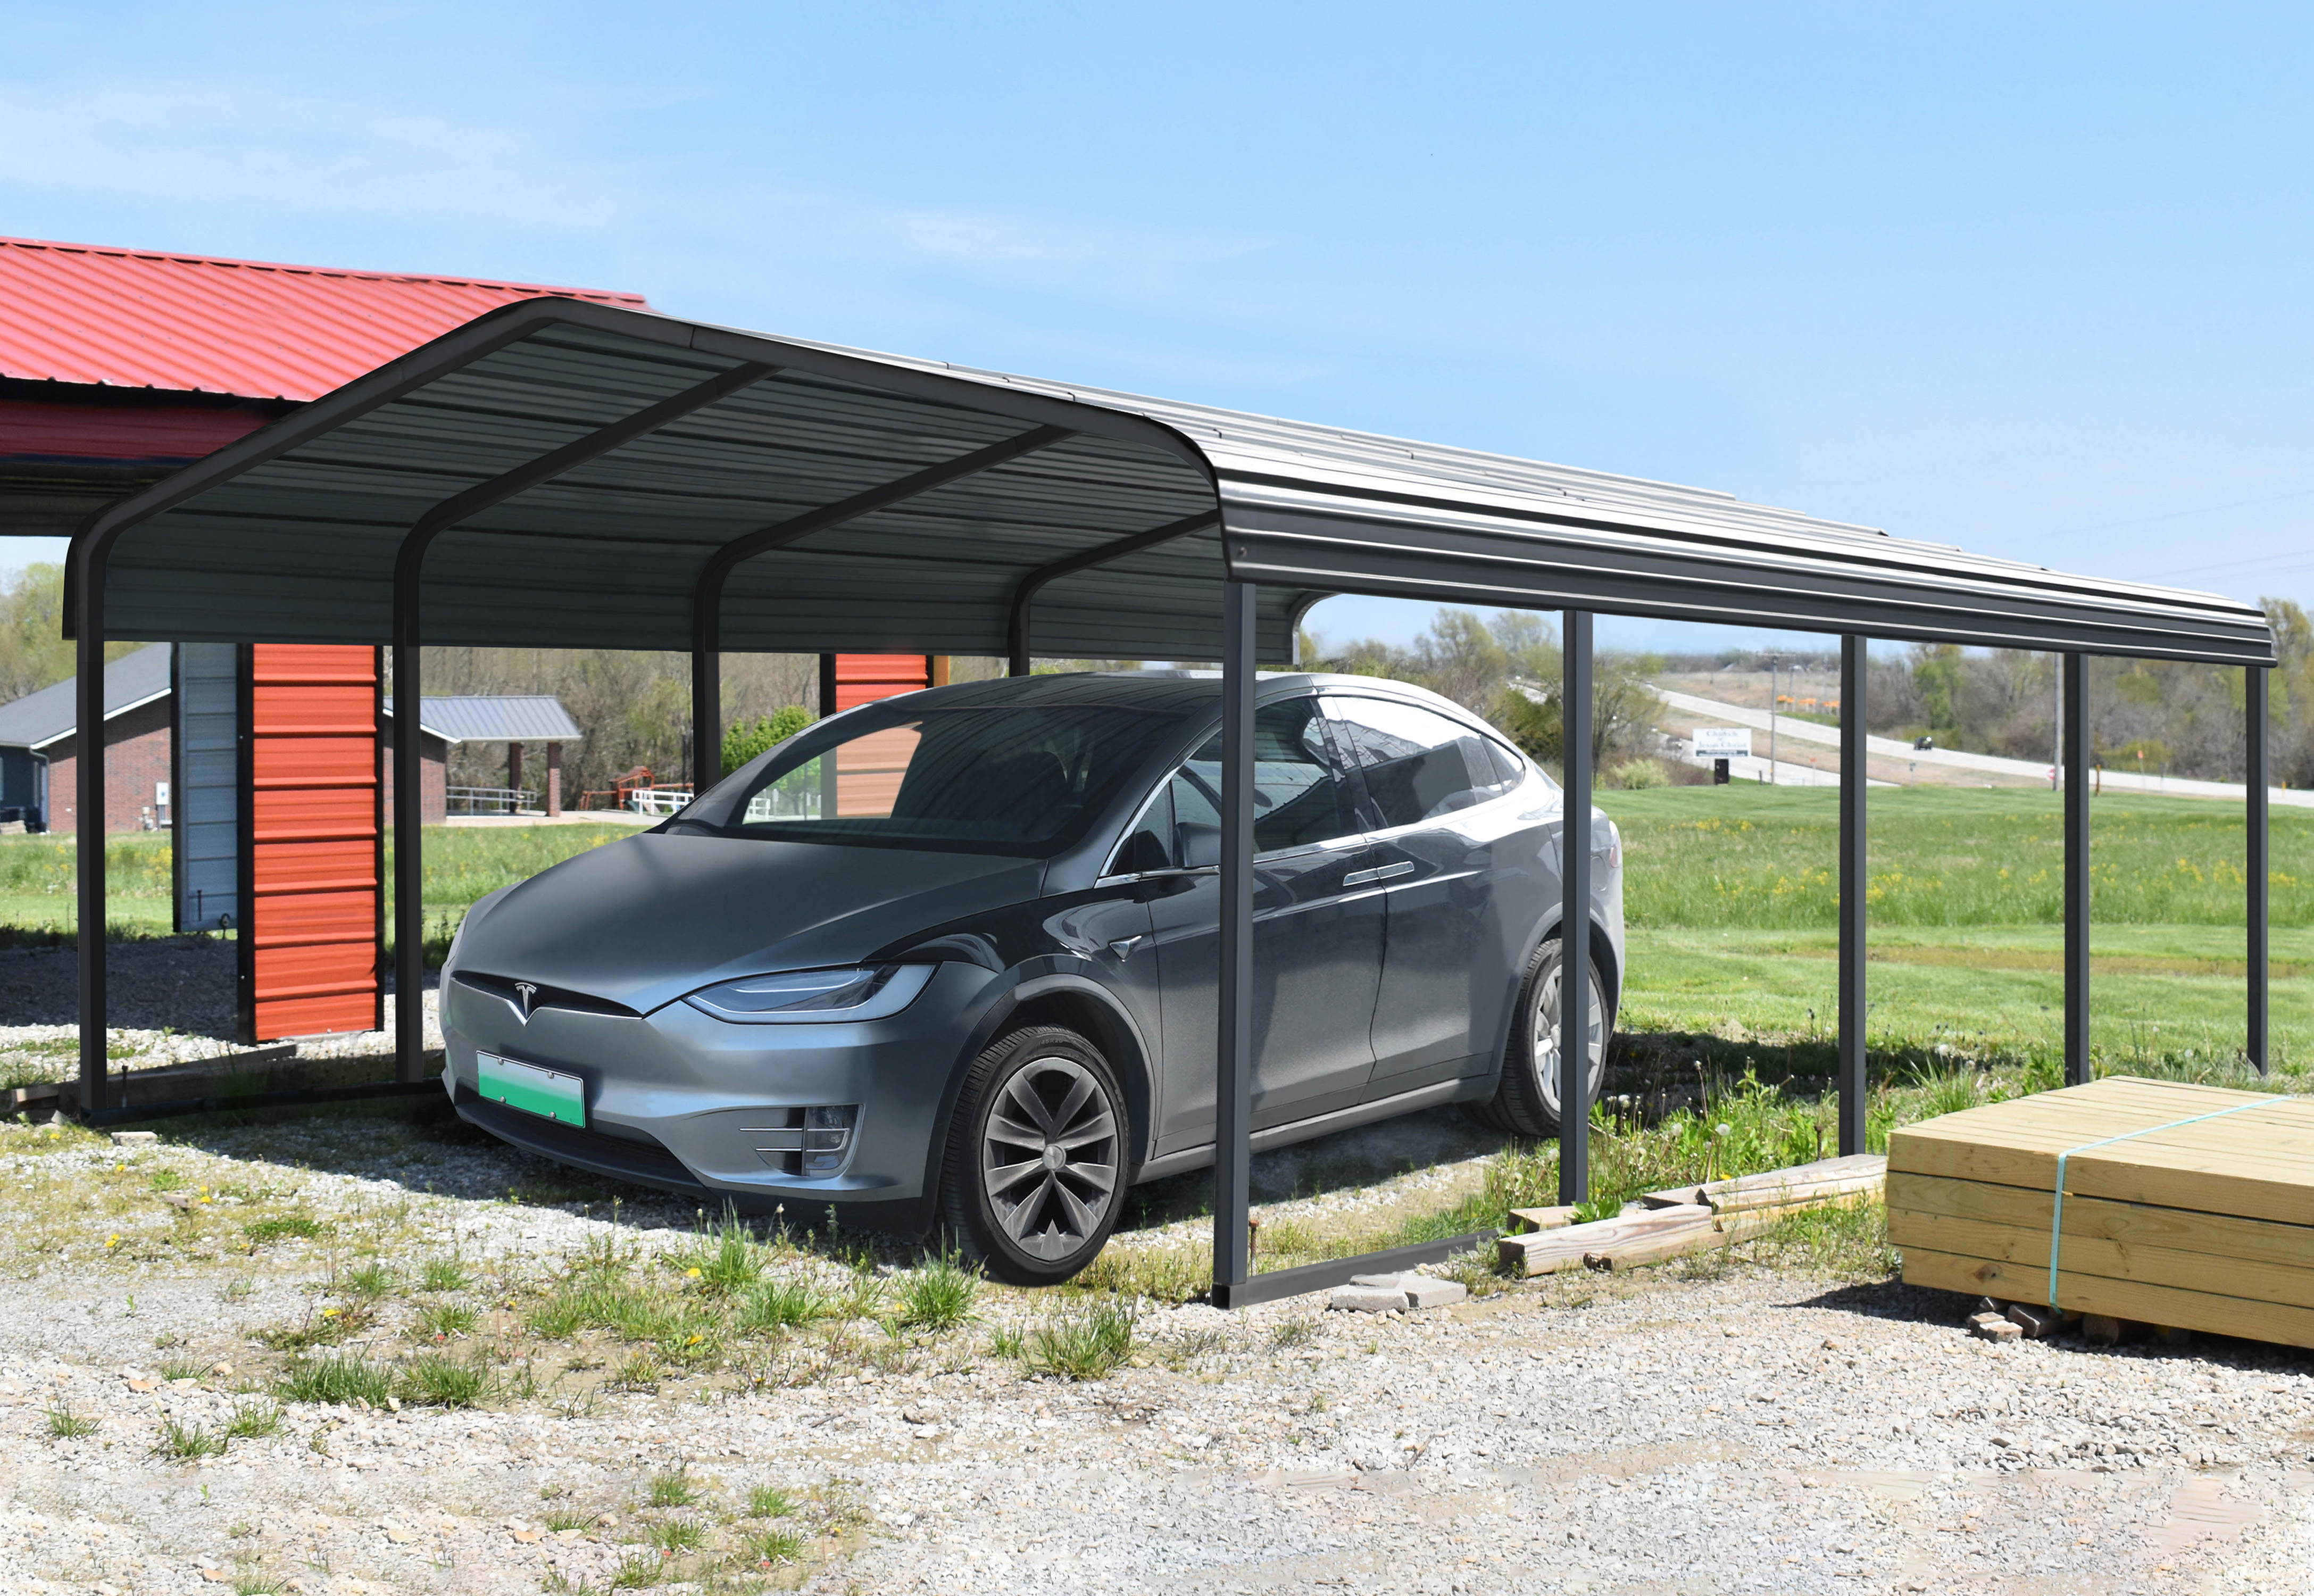 VEIKOUS 20' x 12' Outdoor Carport, Galvanized Metal Heavy Duty Garage Car Storage Shelter, Grey - image 8 of 17